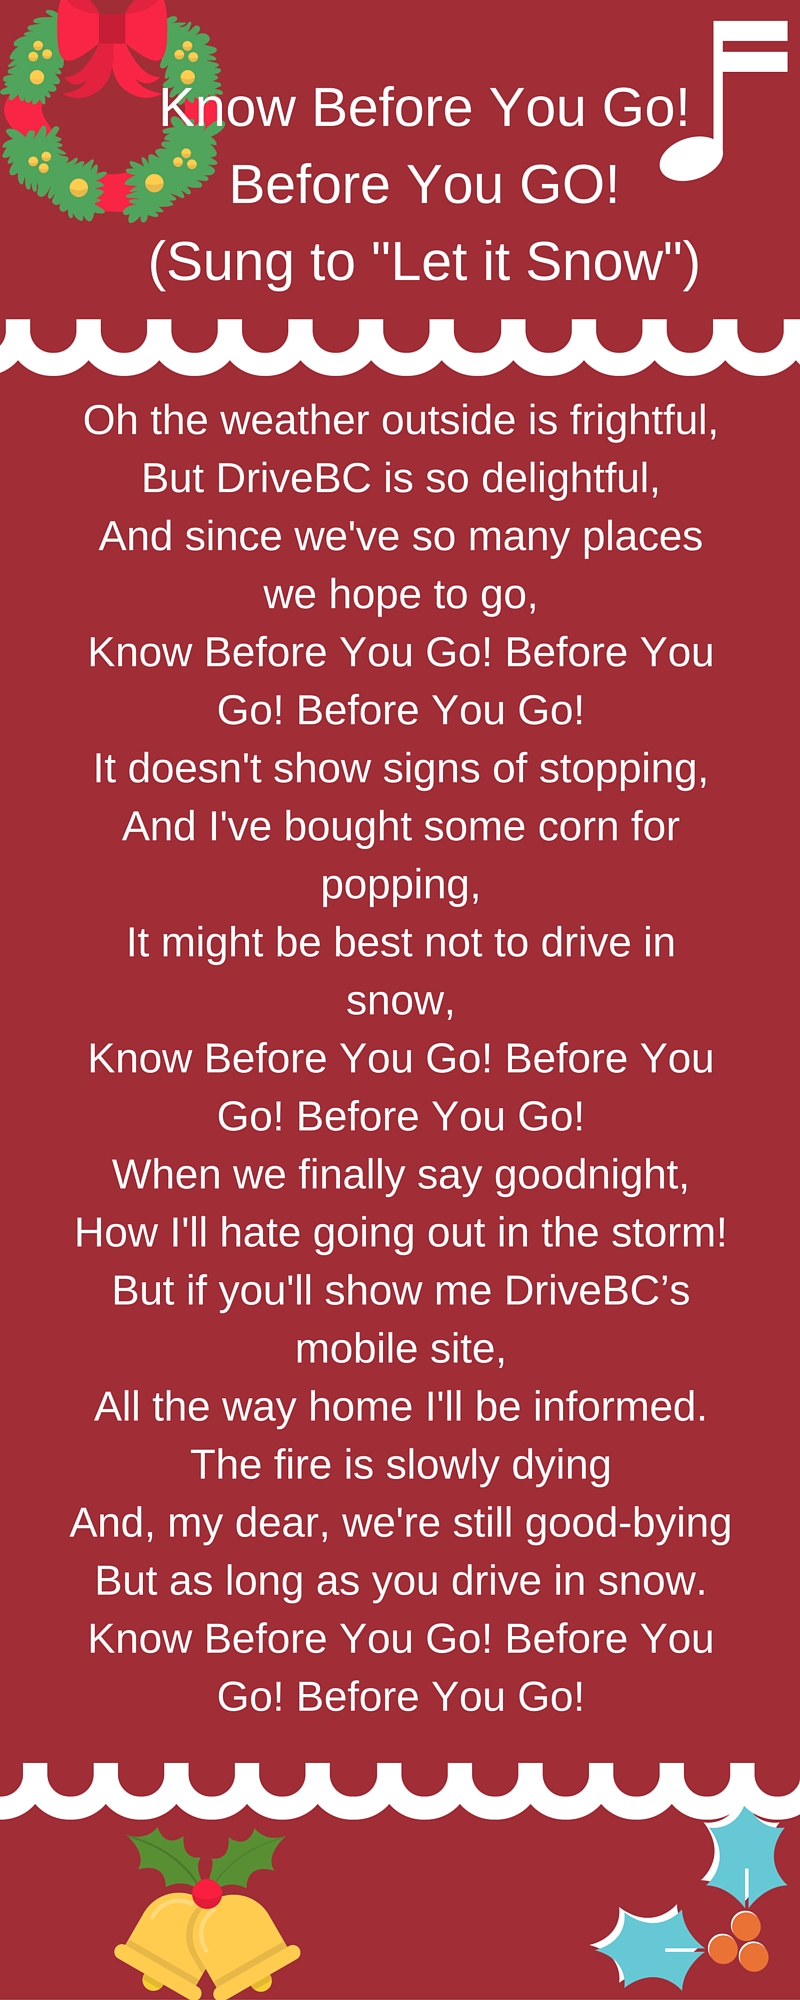 Let it Snow lyrics promoting DriveBC